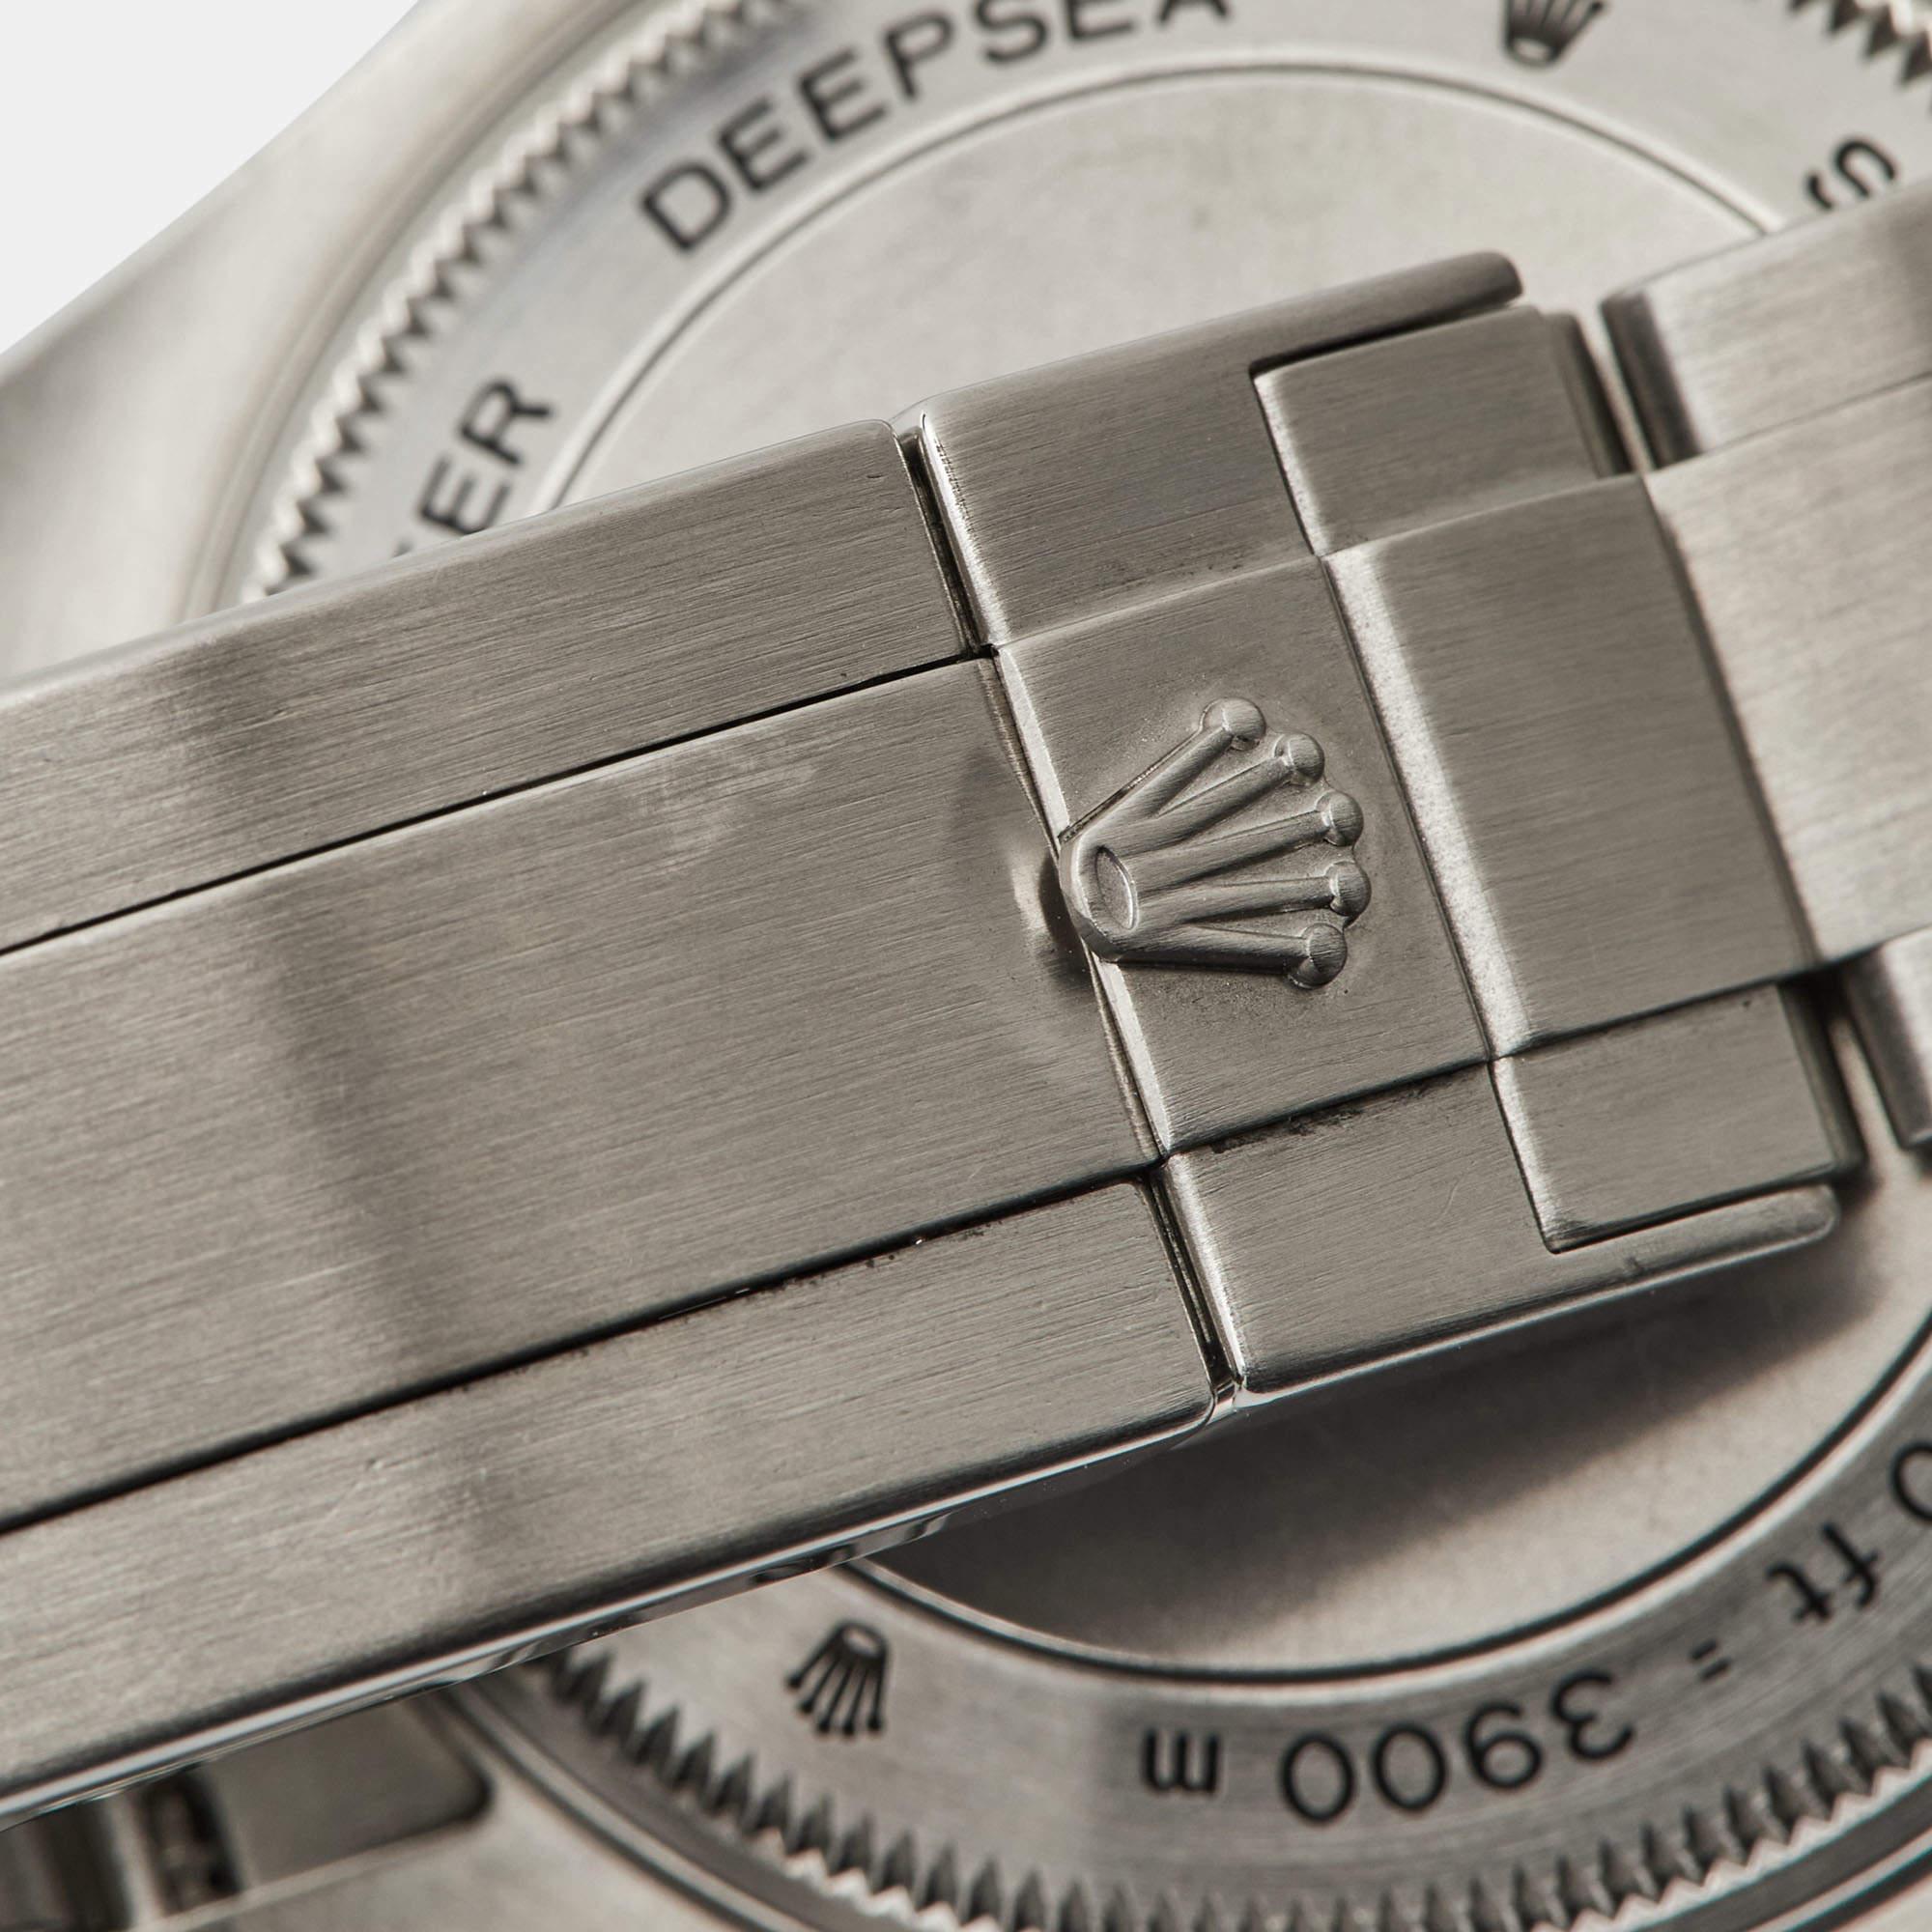 Contemporary Rolex Ceramic Stainless Steel DeepSea Sea-Dweller Men's Wristwatch 4 mm